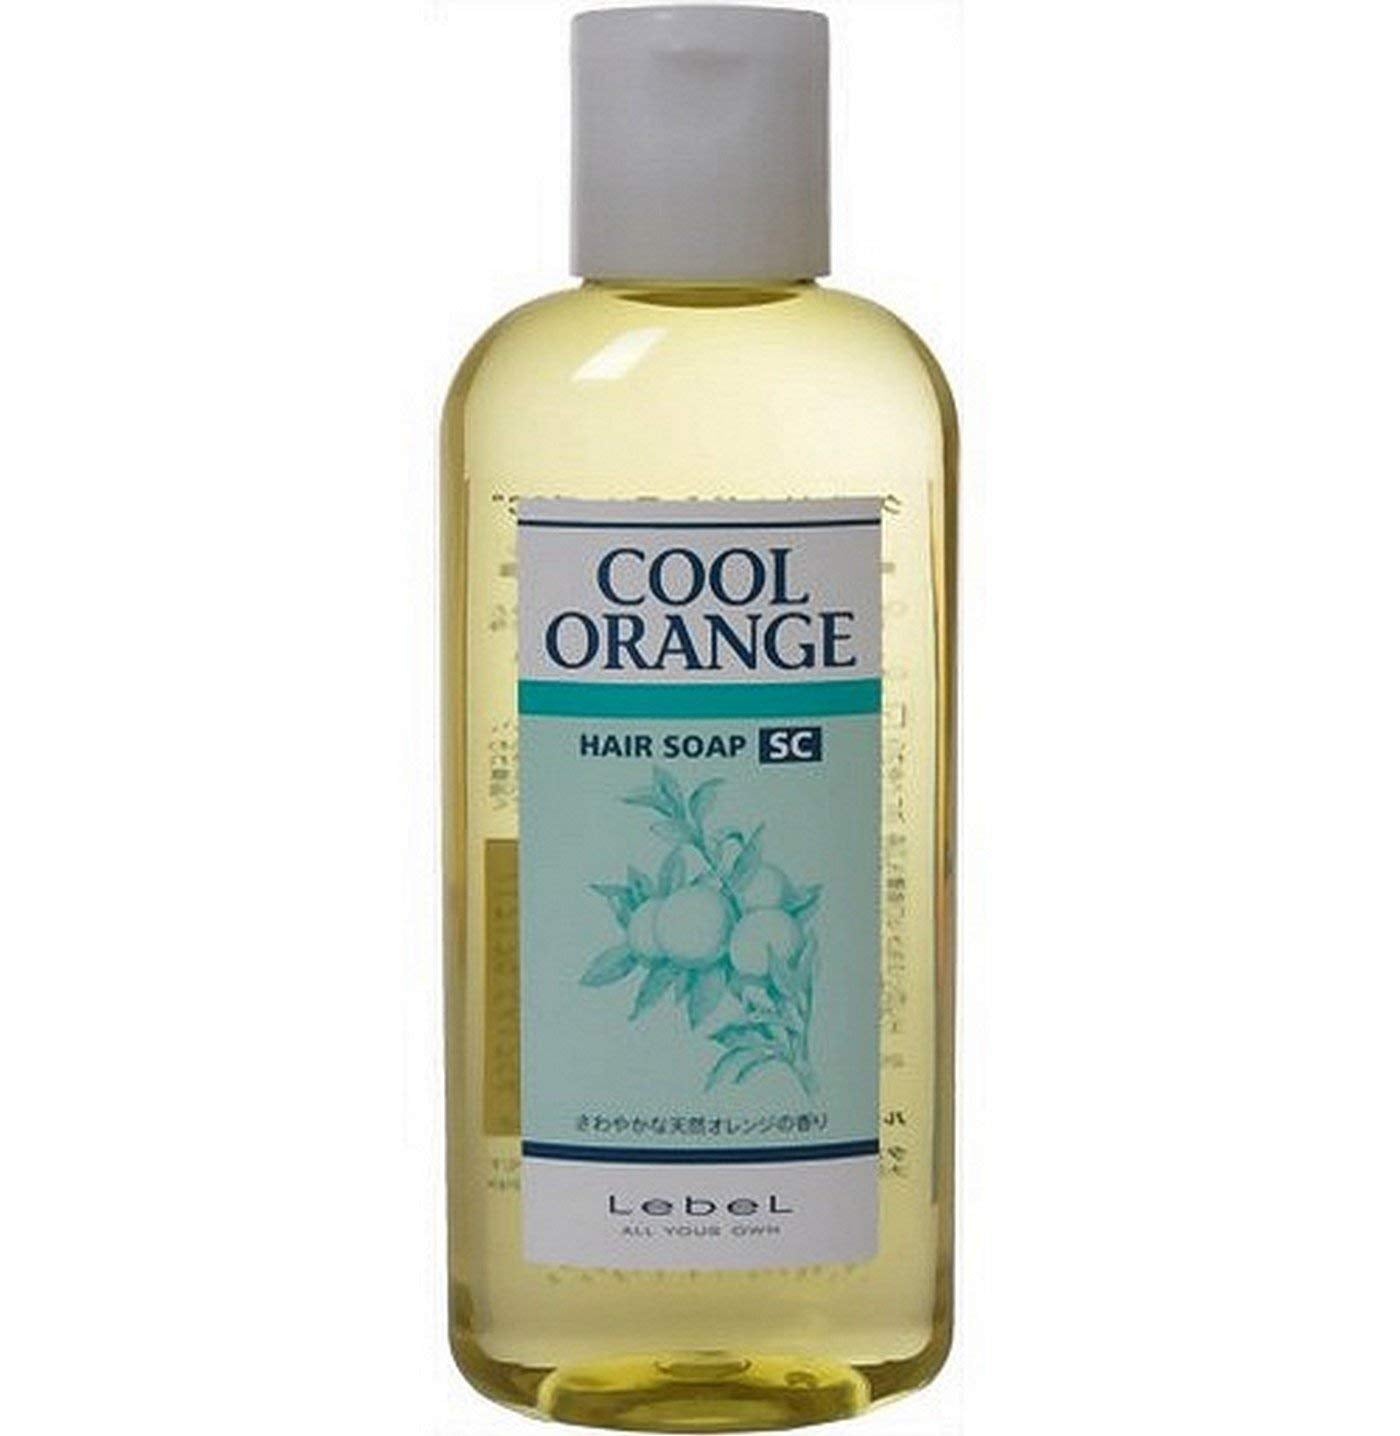 LebeL COOL ORANGE hair soap SC (200ml)